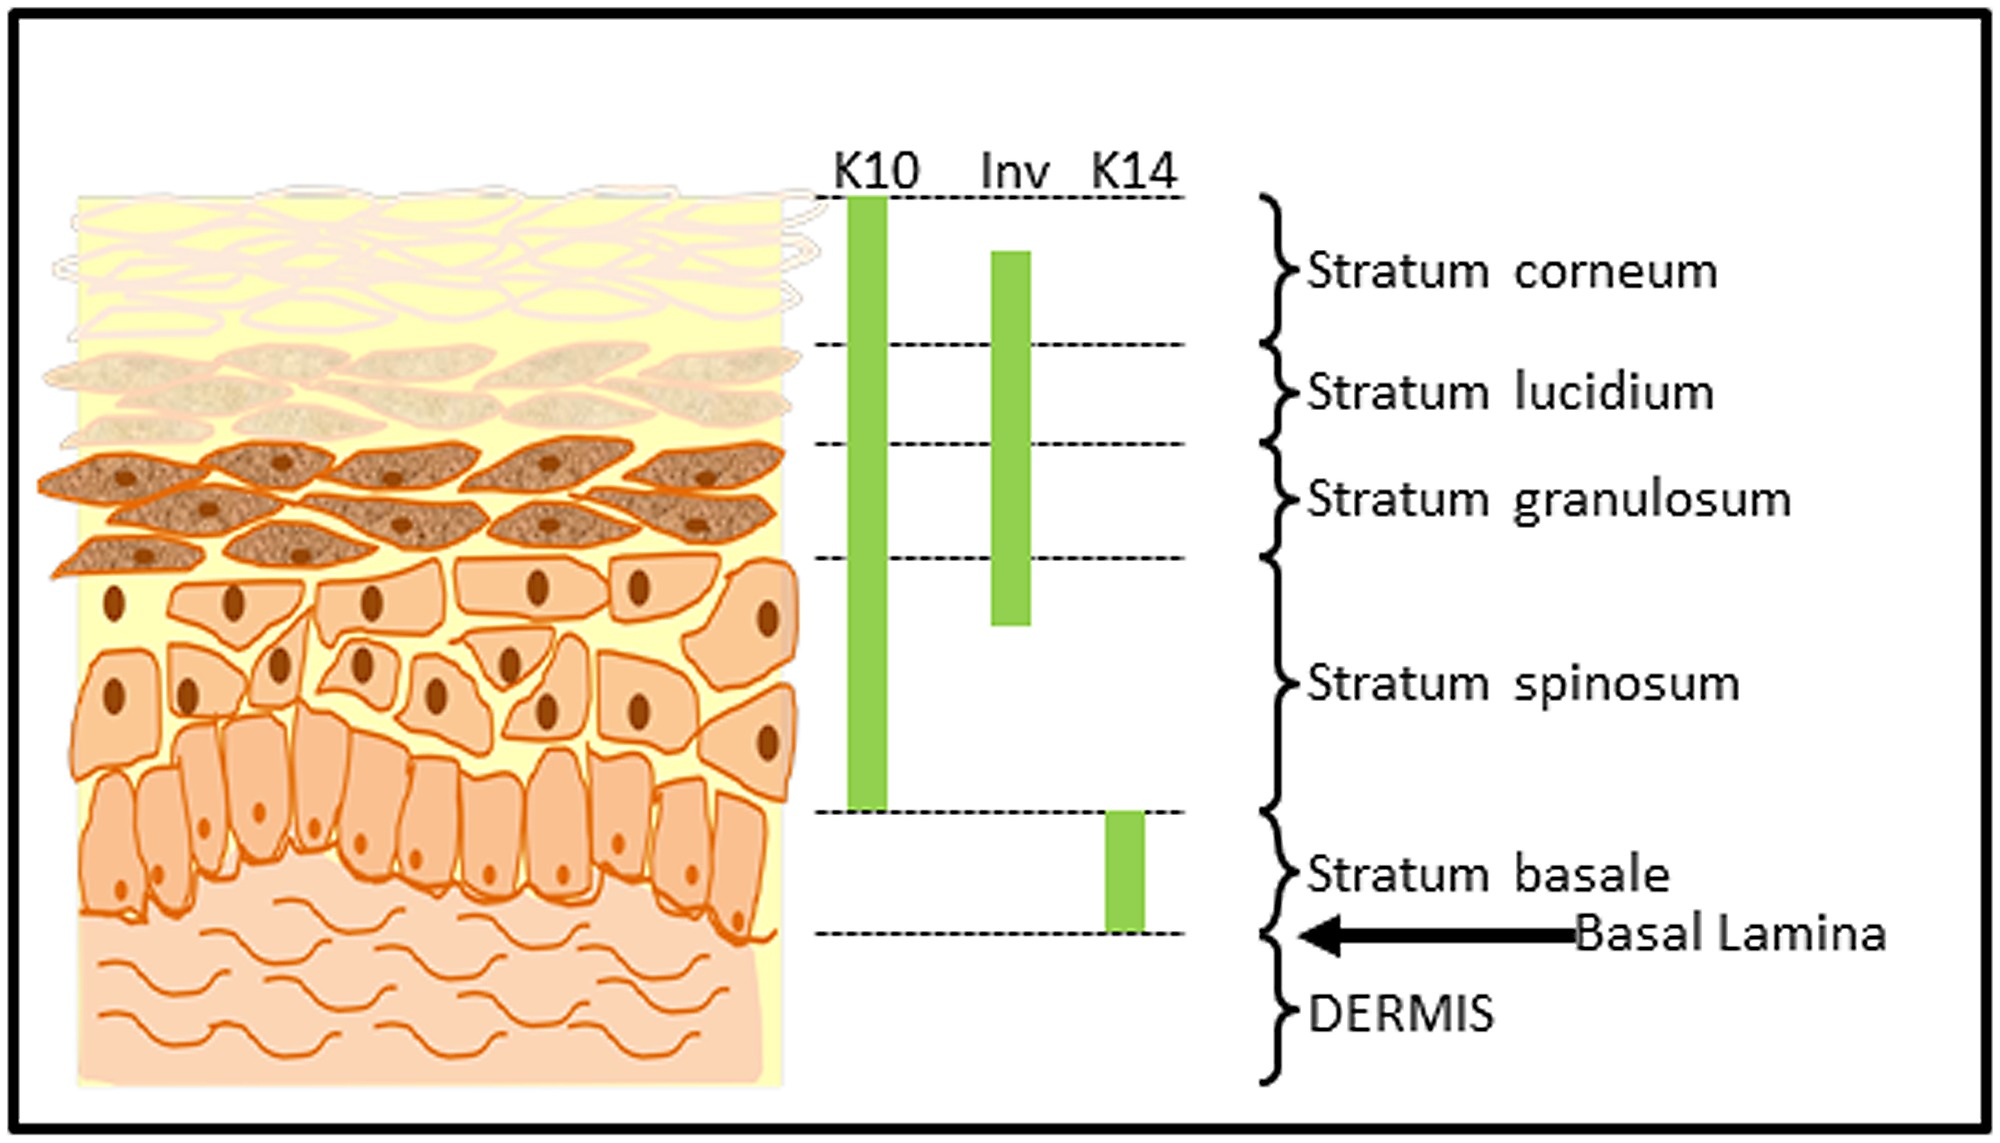 Human Skin Diagram Diagram Of Human Skin Showing Differentiated Keratinocytes Of The